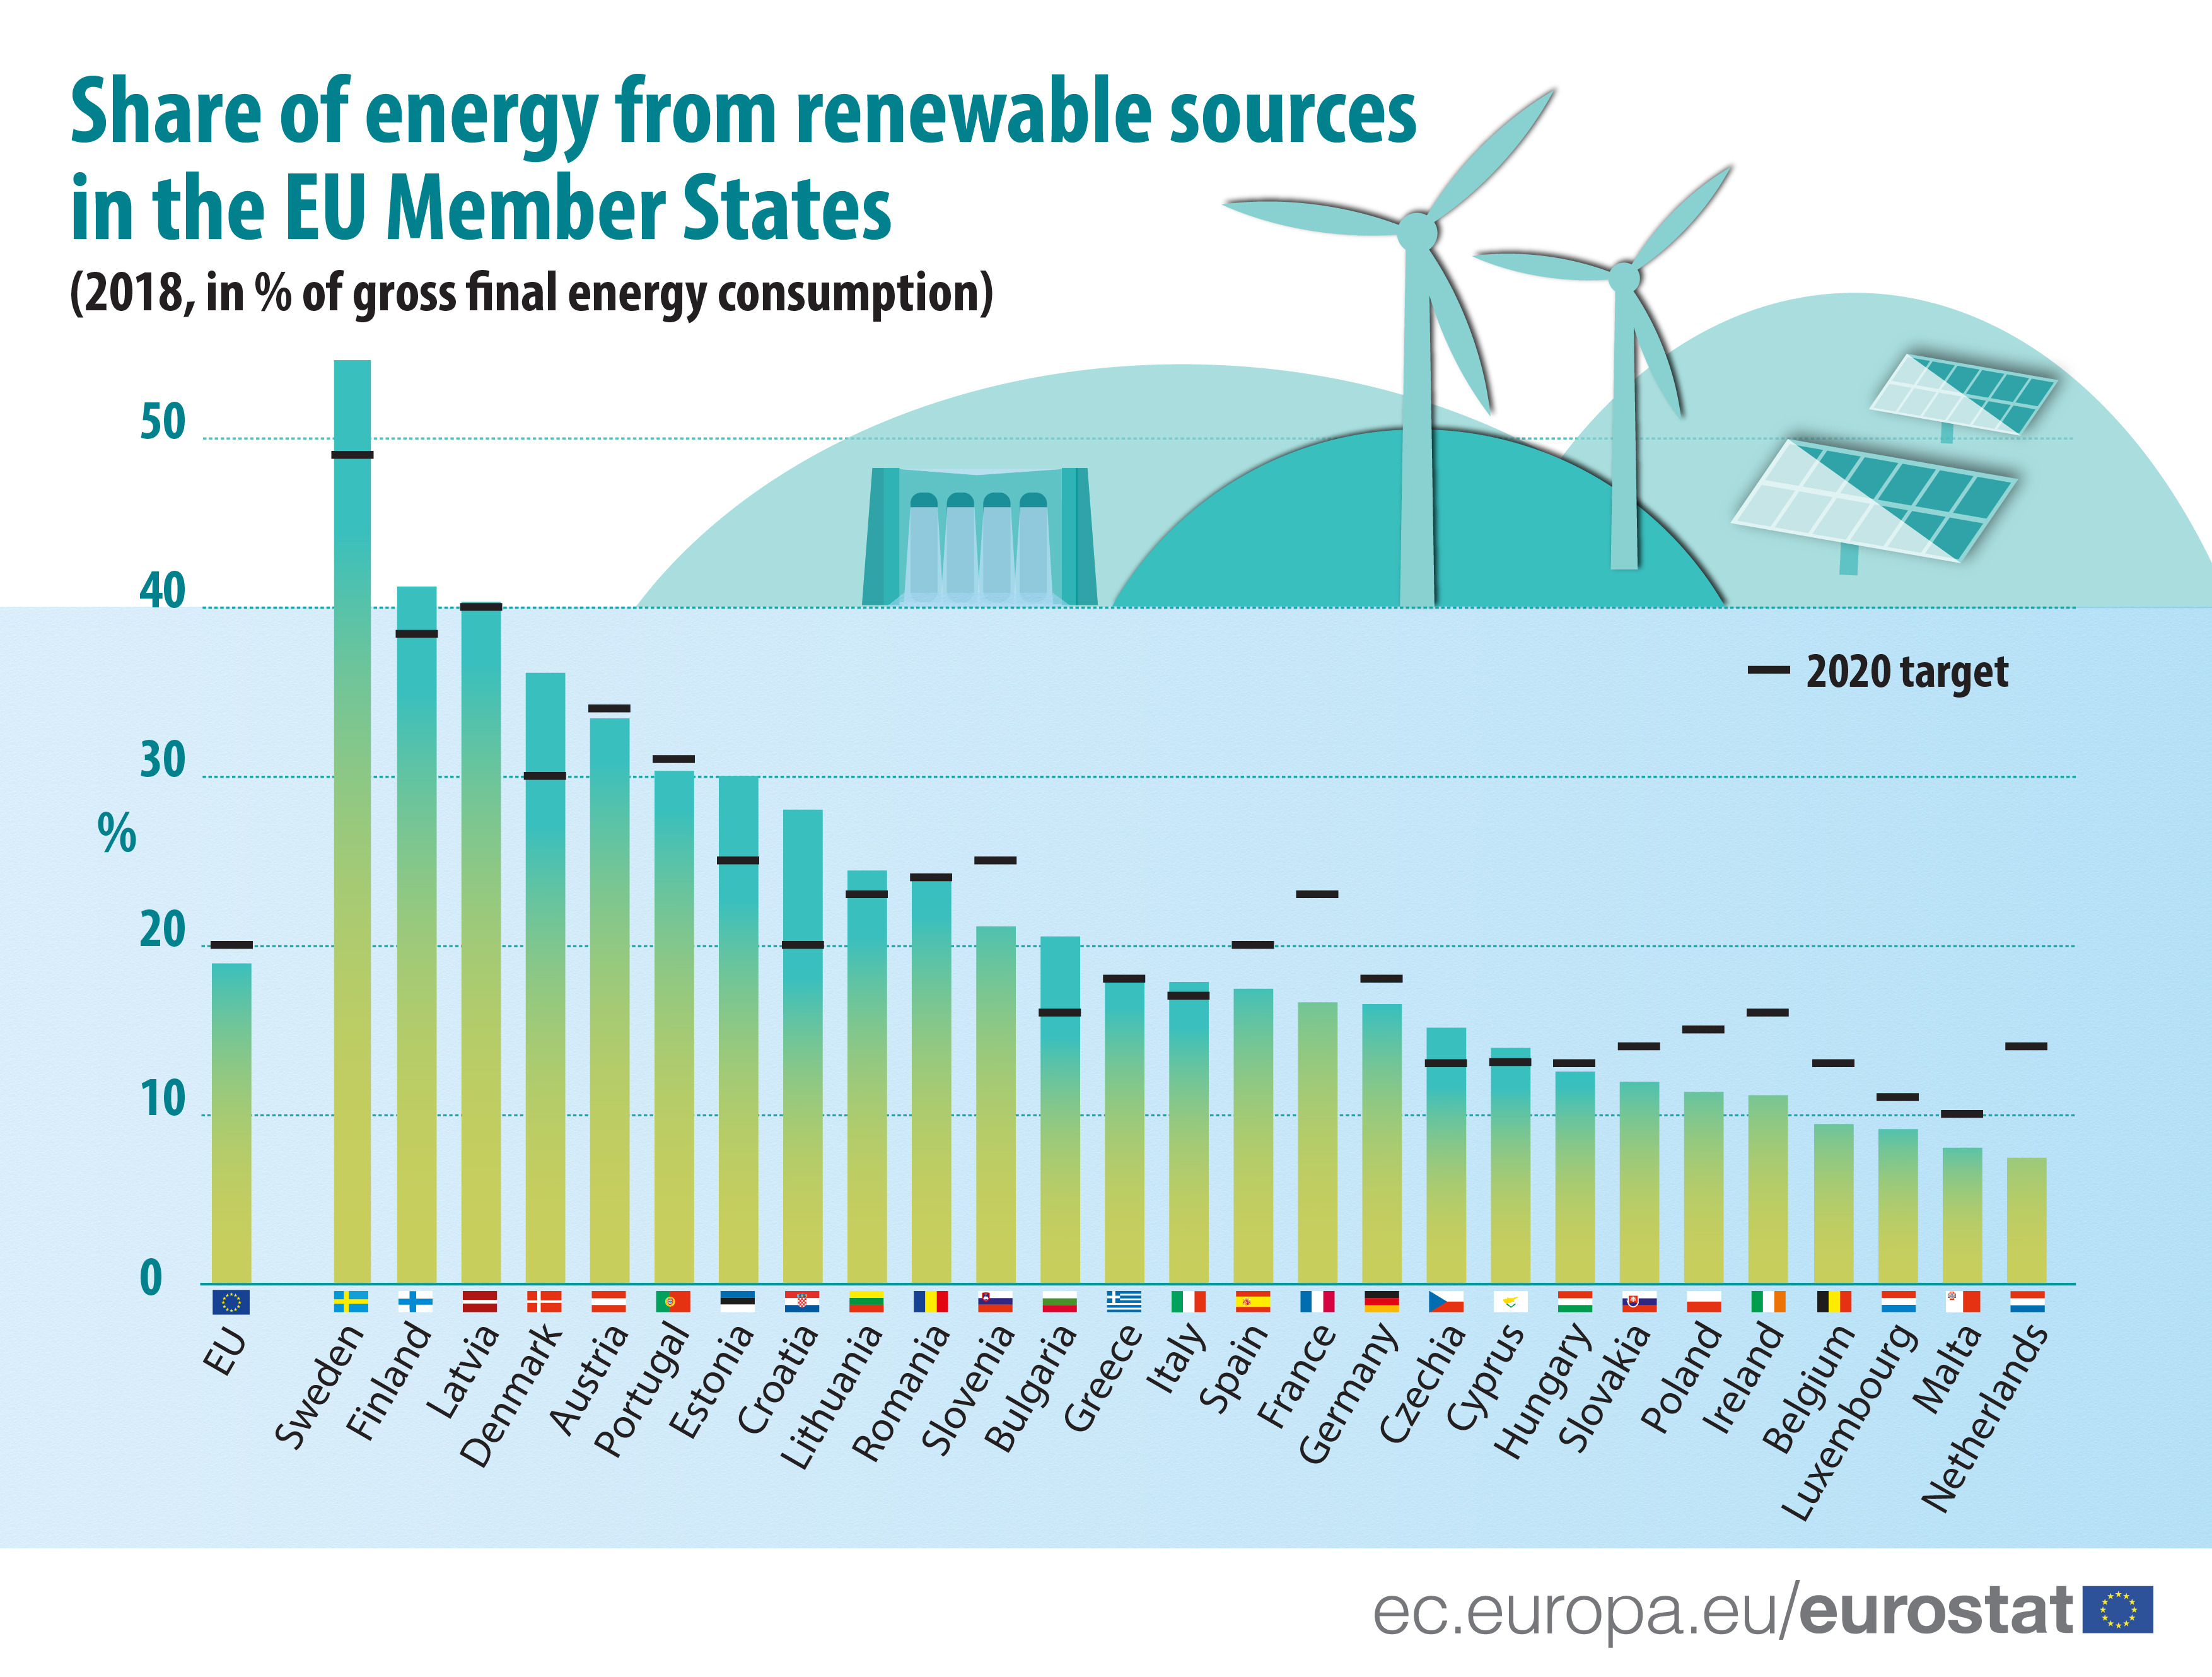 Renewable Energy Statistics Statistics Explained